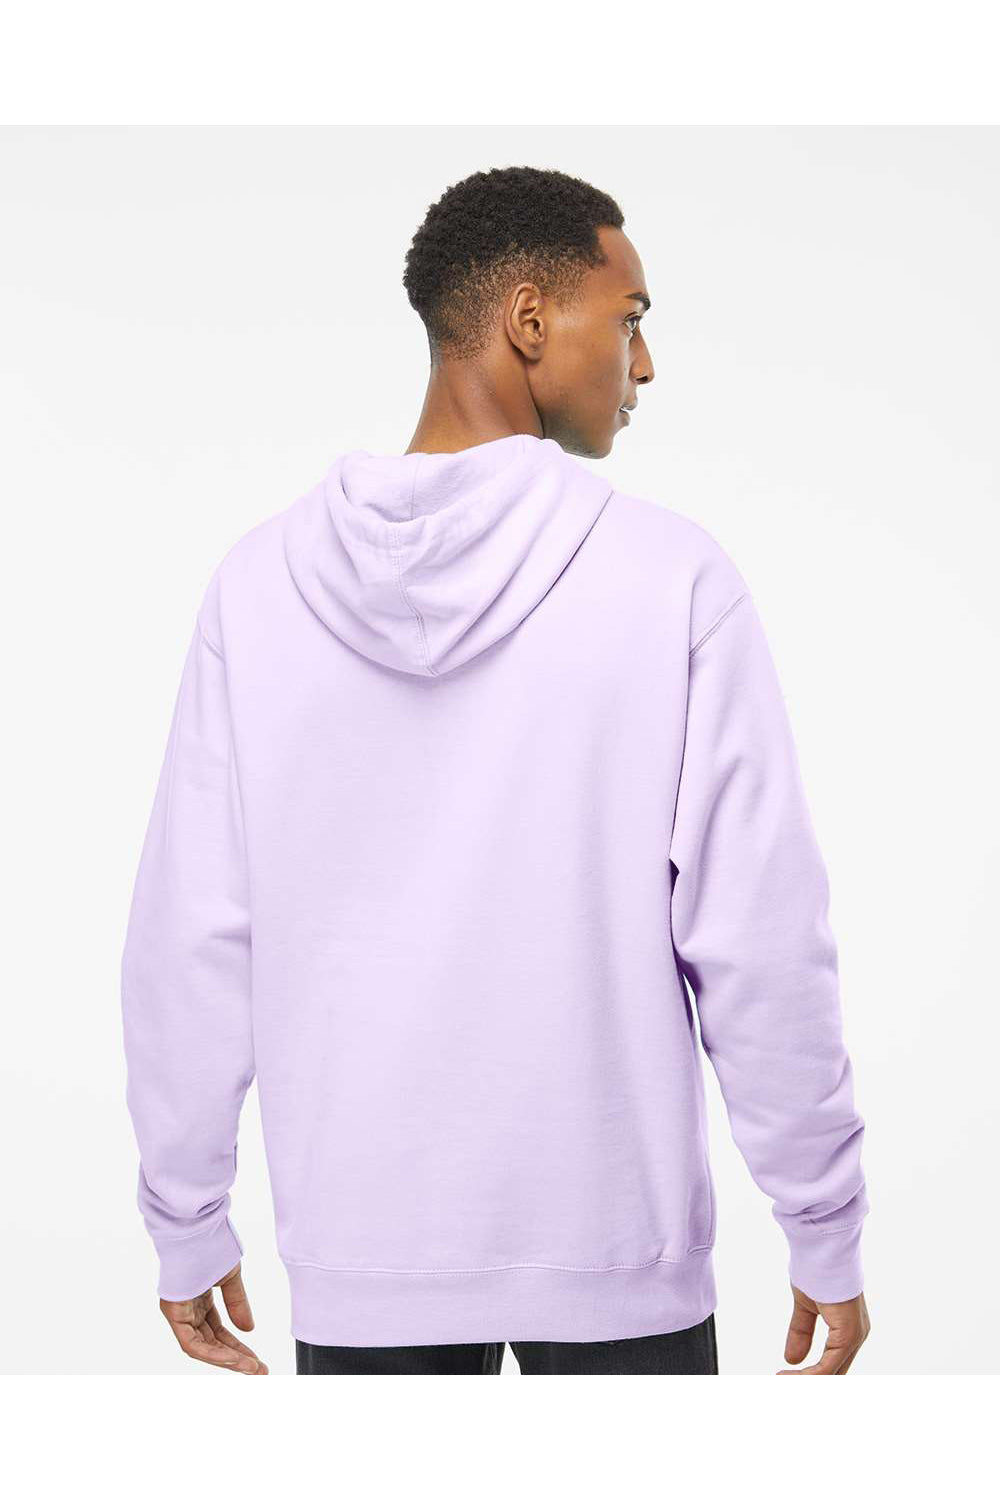 Independent Trading Co. SS4500 Mens Hooded Sweatshirt Hoodie Lavender Purple Model Back